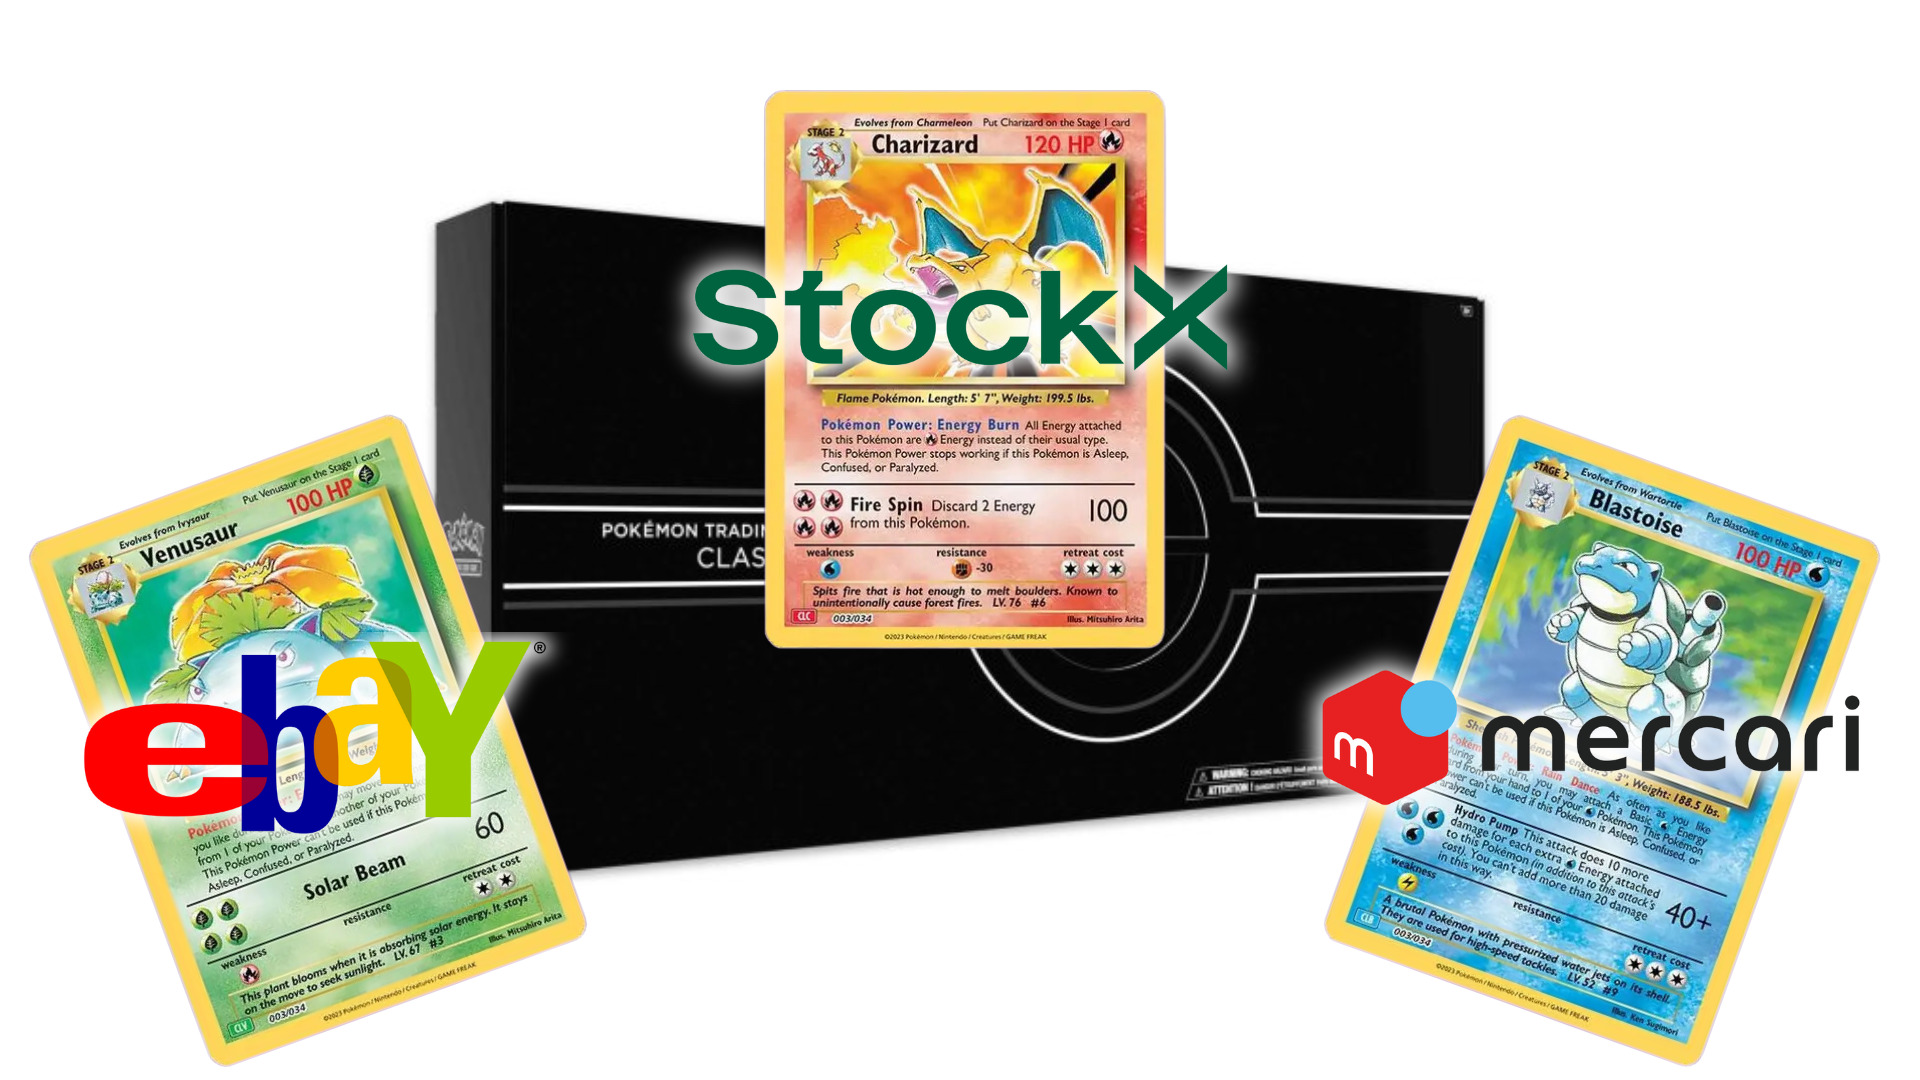 Pokemon TCG Classic: Release date, price, decks & cards, more